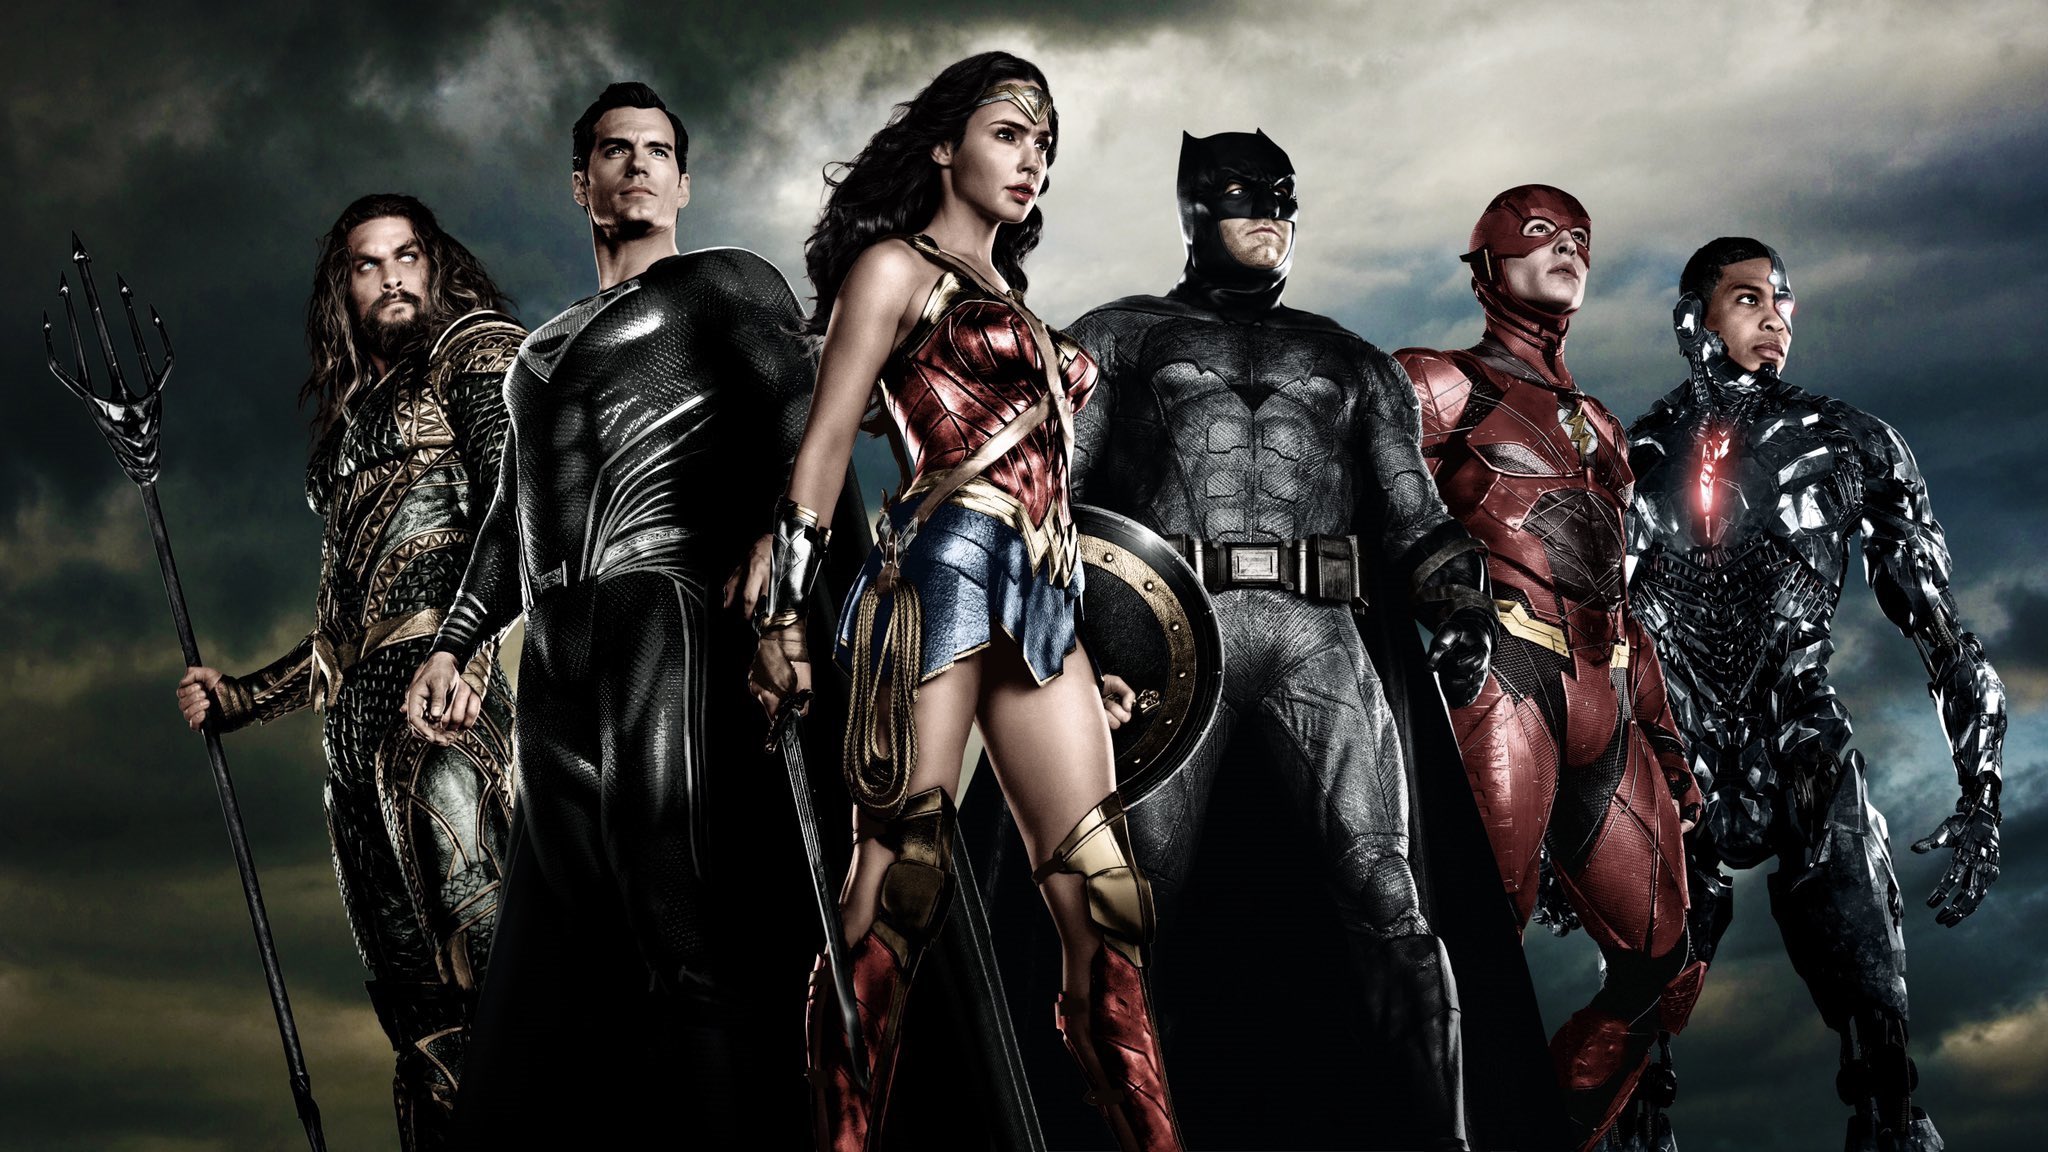 Handy-Wallpaper Batman, Blinken, Filme, Übermensch, Aquaman, Wonderwoman, Cyborg (Dc Comics), Justice League, Zack Snyder: Justice League kostenlos herunterladen.